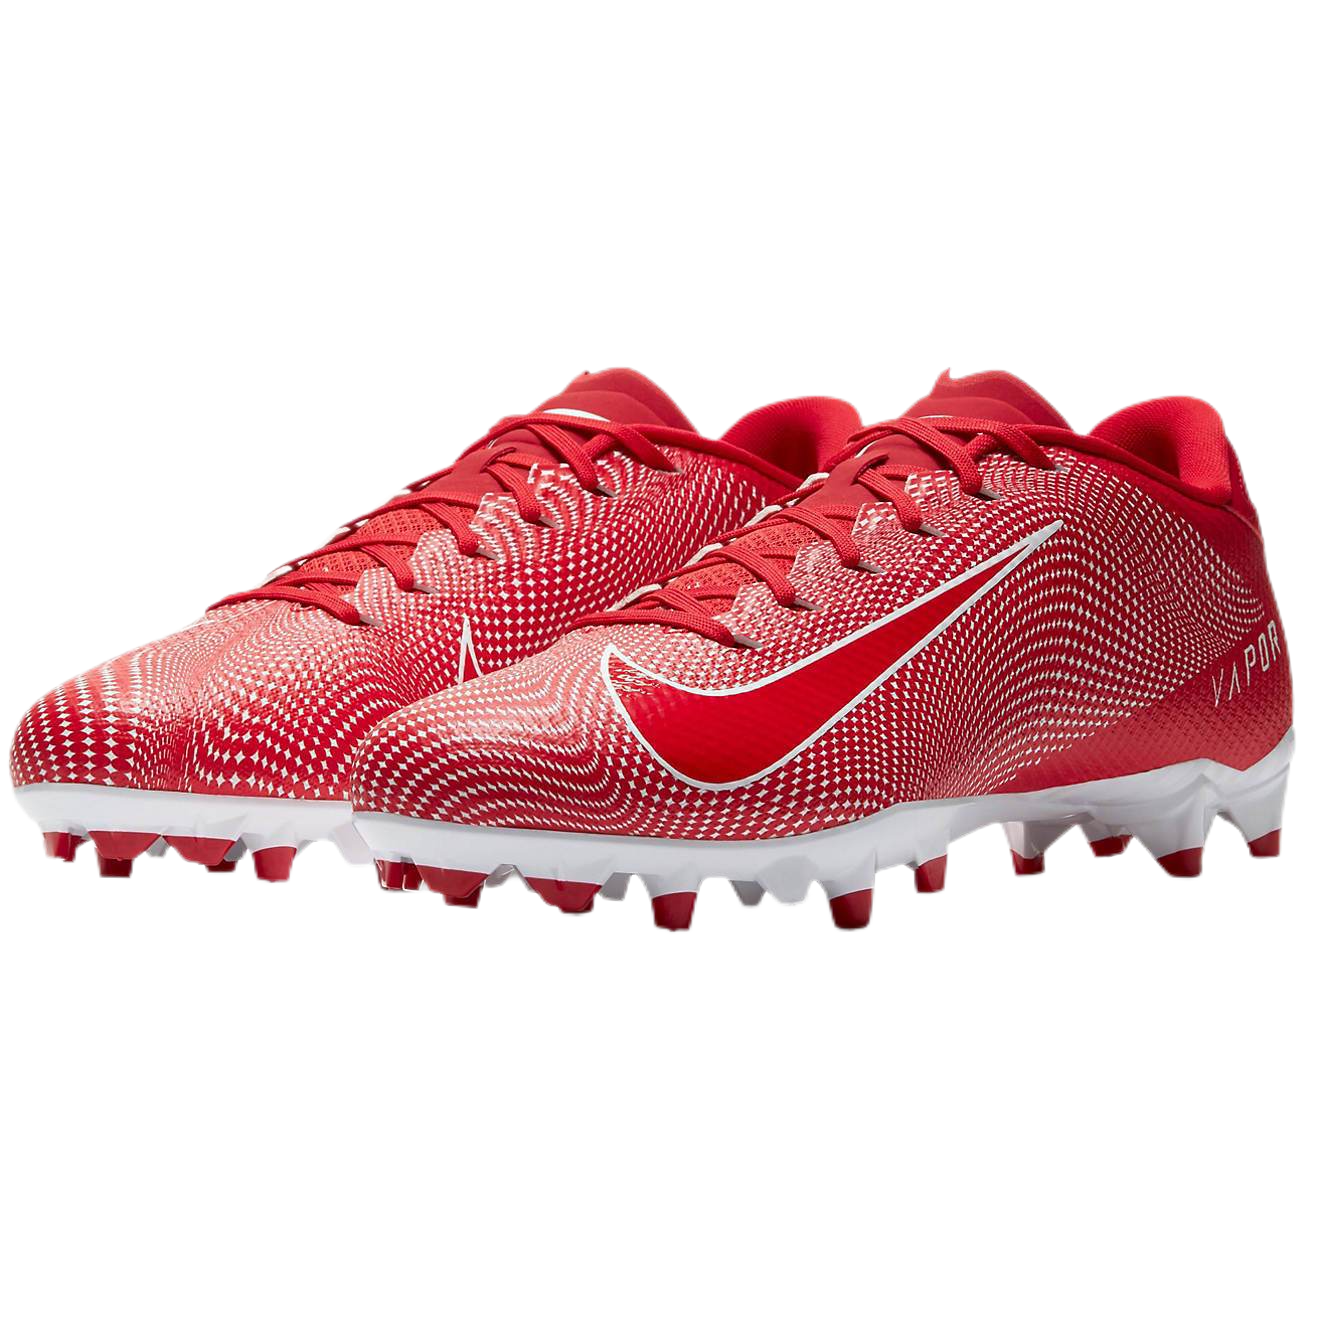 Nike Vapor Edge Team - Premium American Football Cleats from Nike - Shop now at Reyrr Athletics